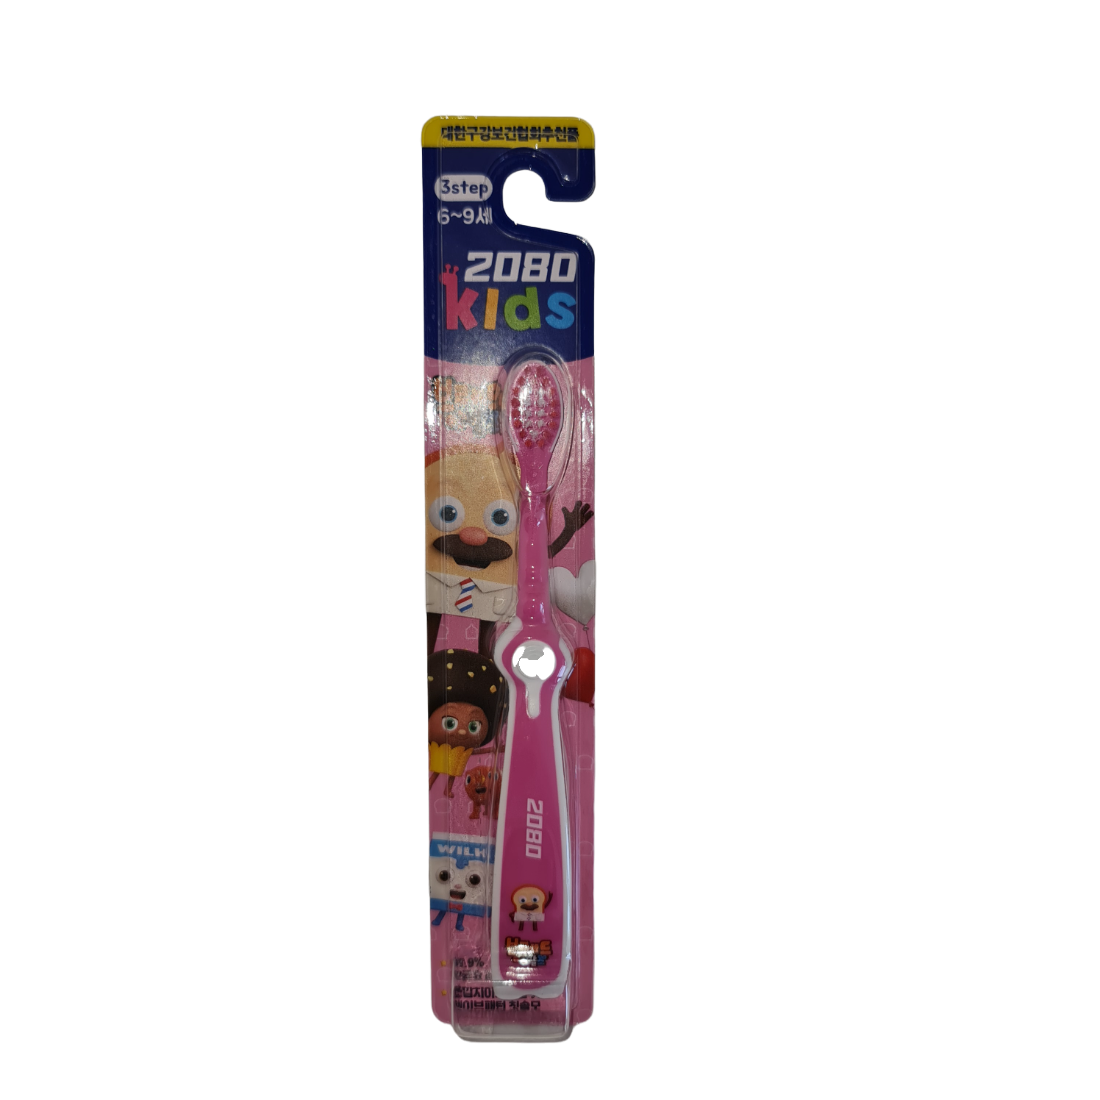 2080 Den Kids Toothbrush Level 3 Детская зубная щетка